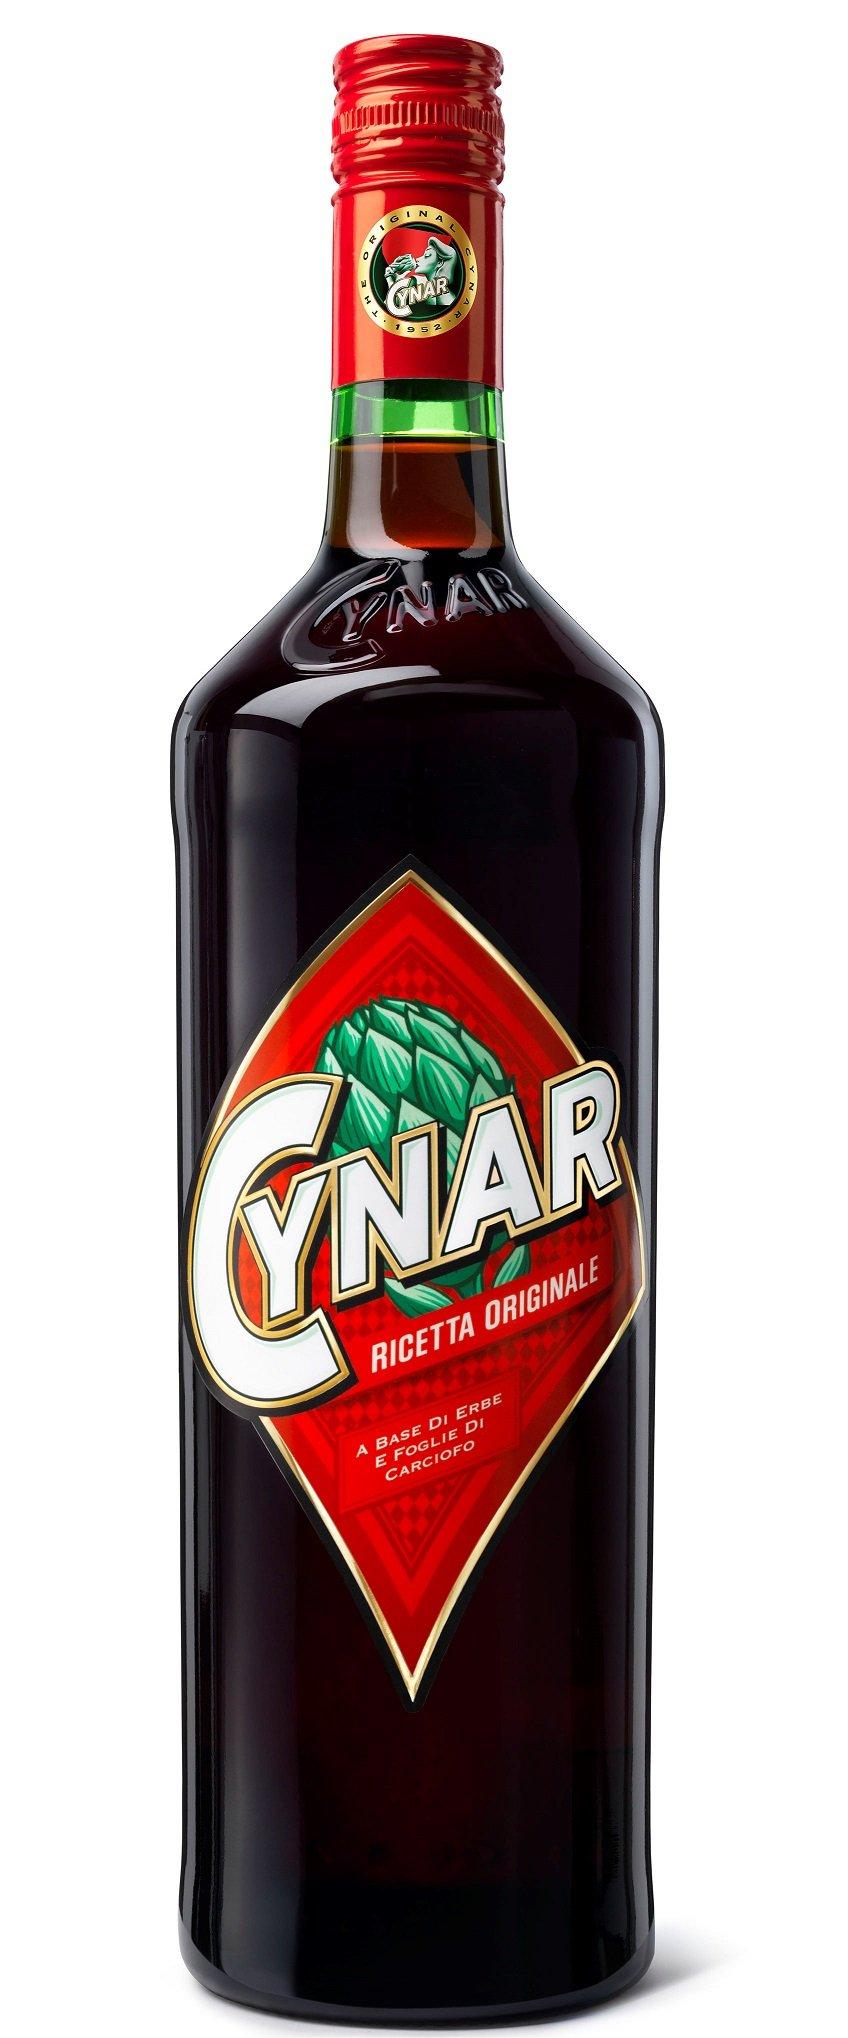 Image of Cynar Original - 100cl